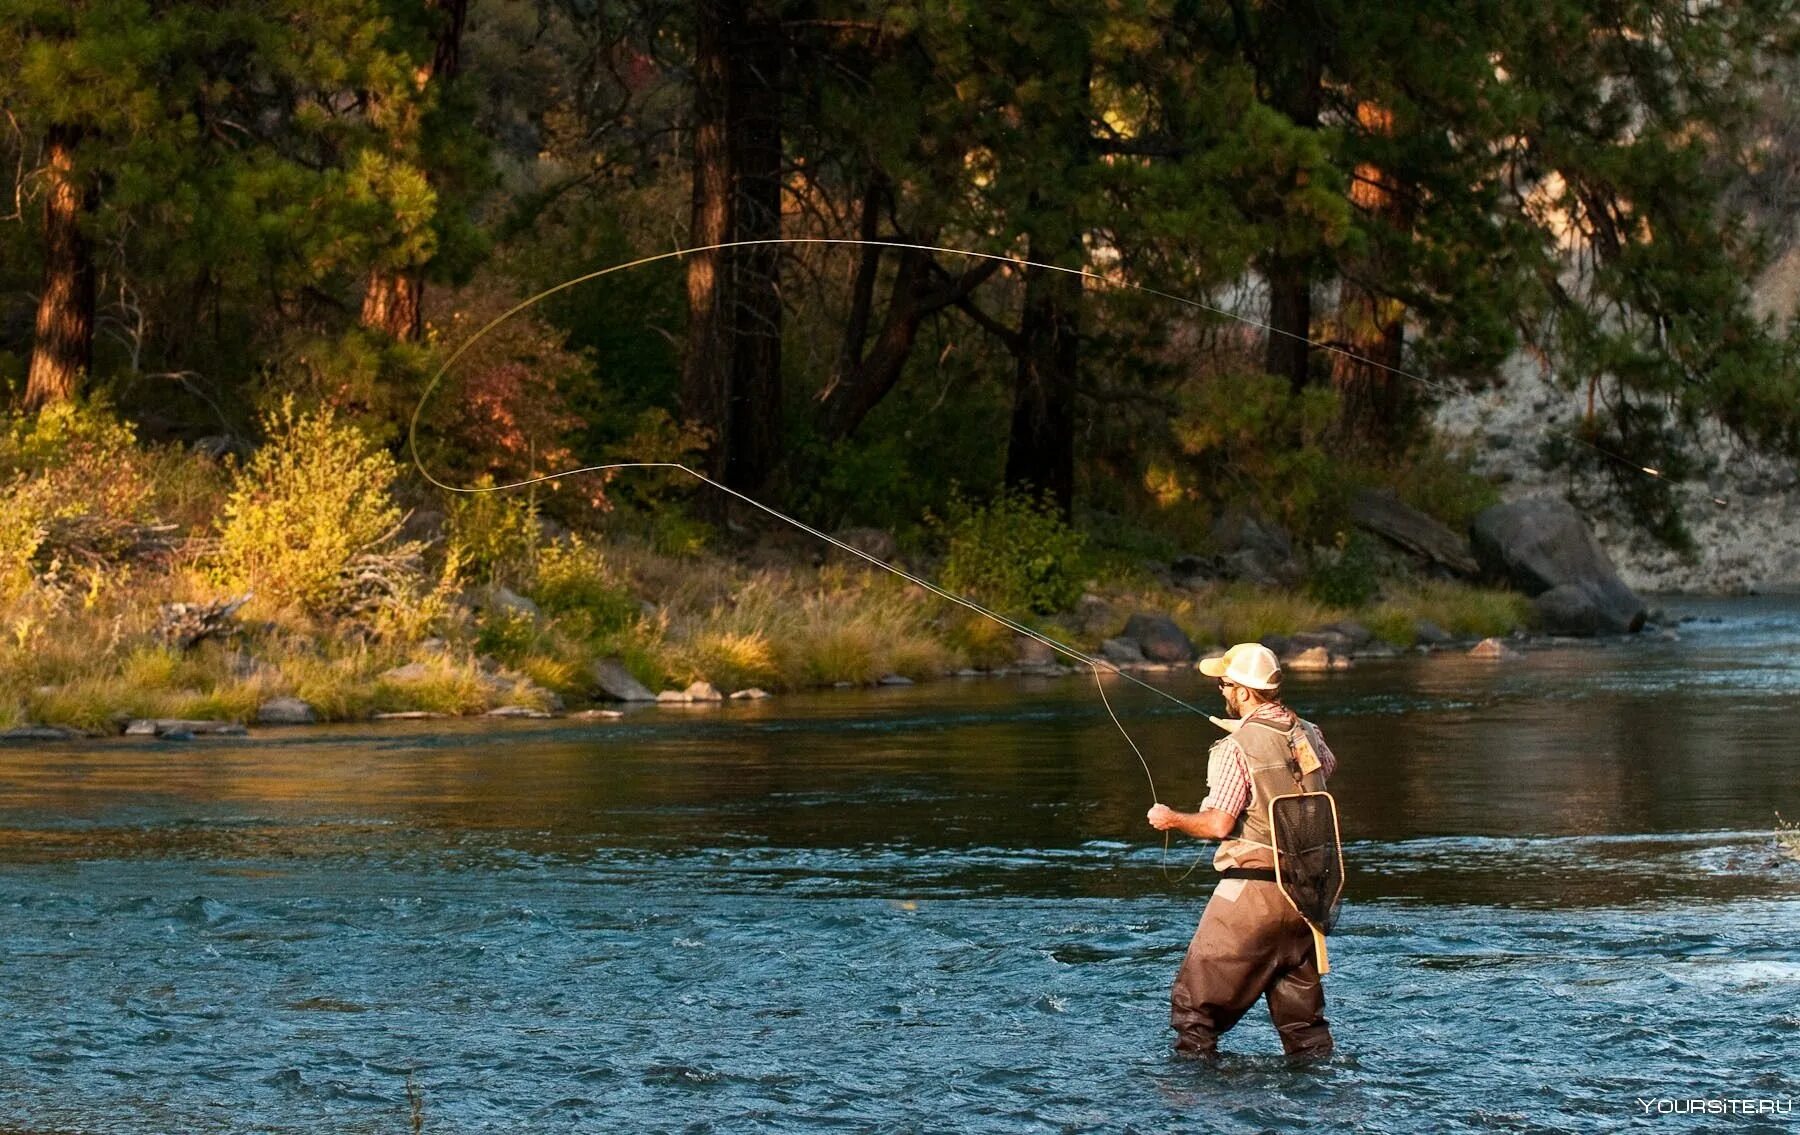 Рыбалка река вода. Природа рыбалка. Осенняя рыбалка. Рыбак на реке. Осень рыбалка.